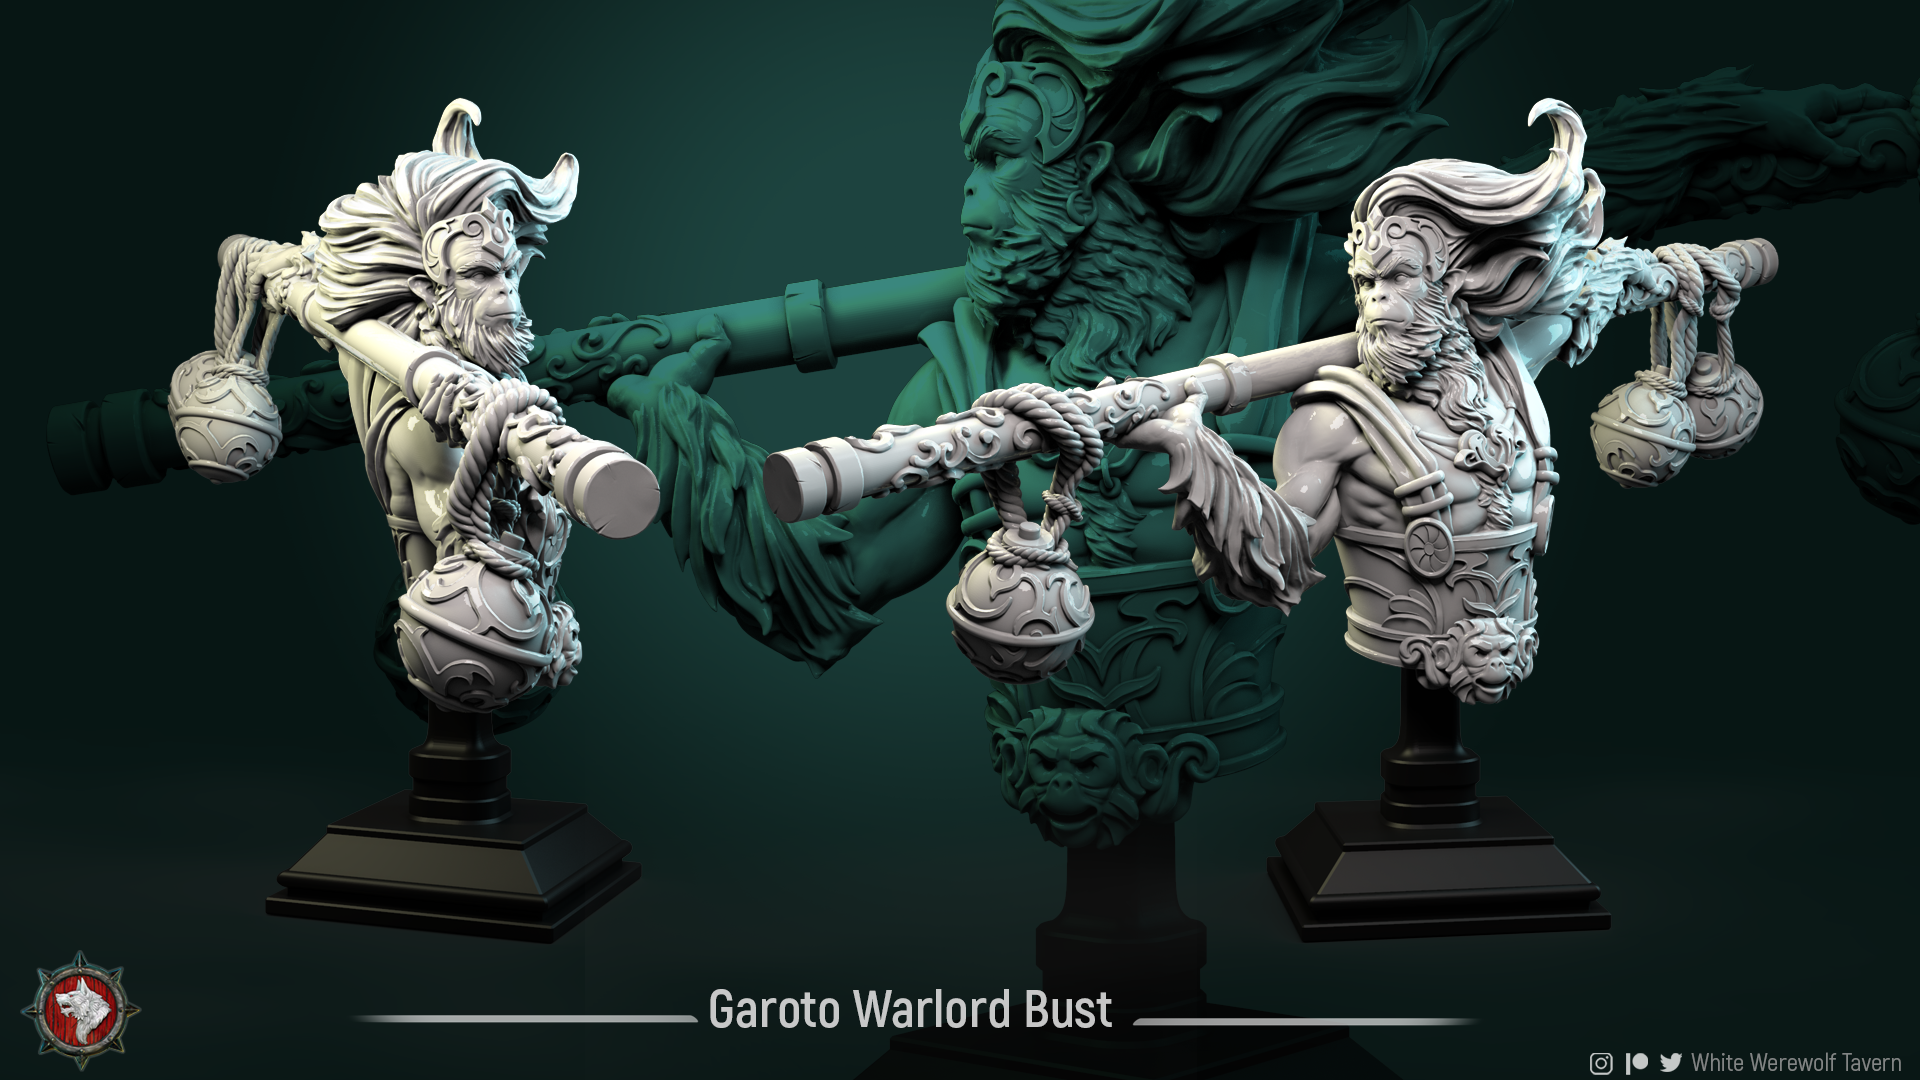 Garoto Warlord Bust